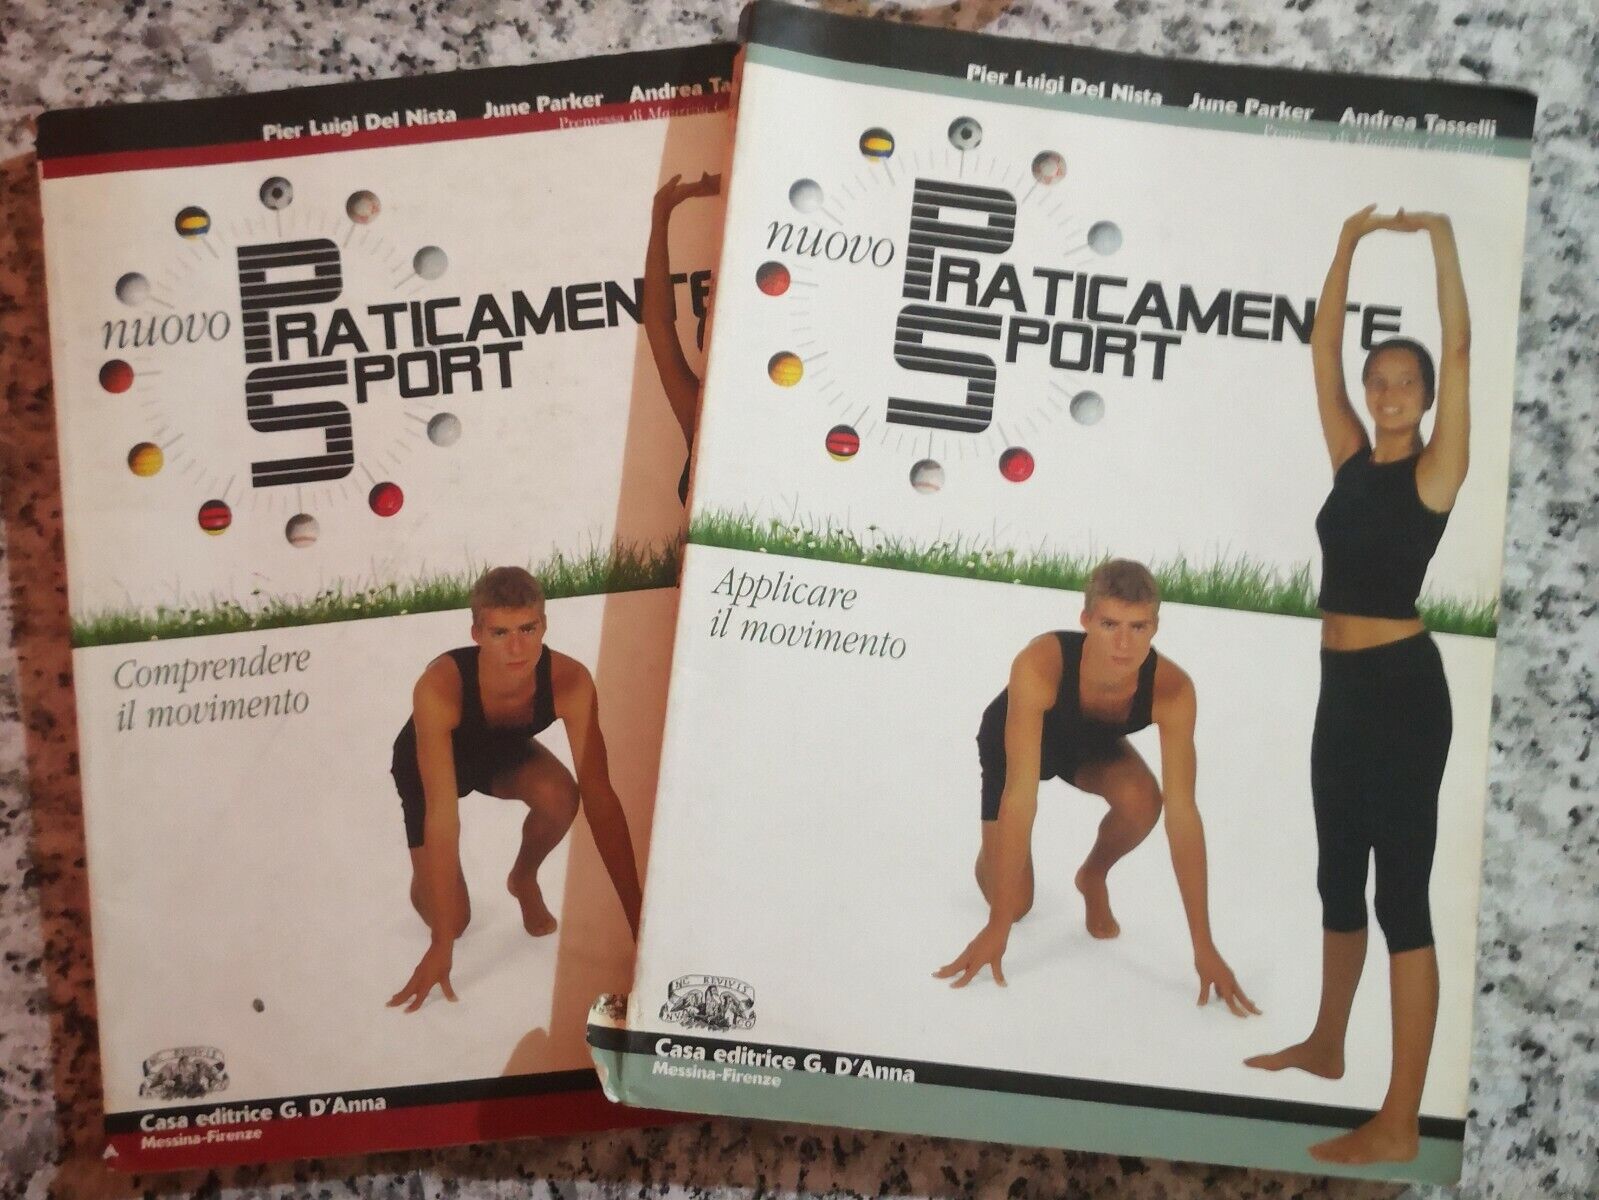   Nuovo Praticamente Sport 2 volumi  di A.a.v.v,  2003,  d'Anna -F